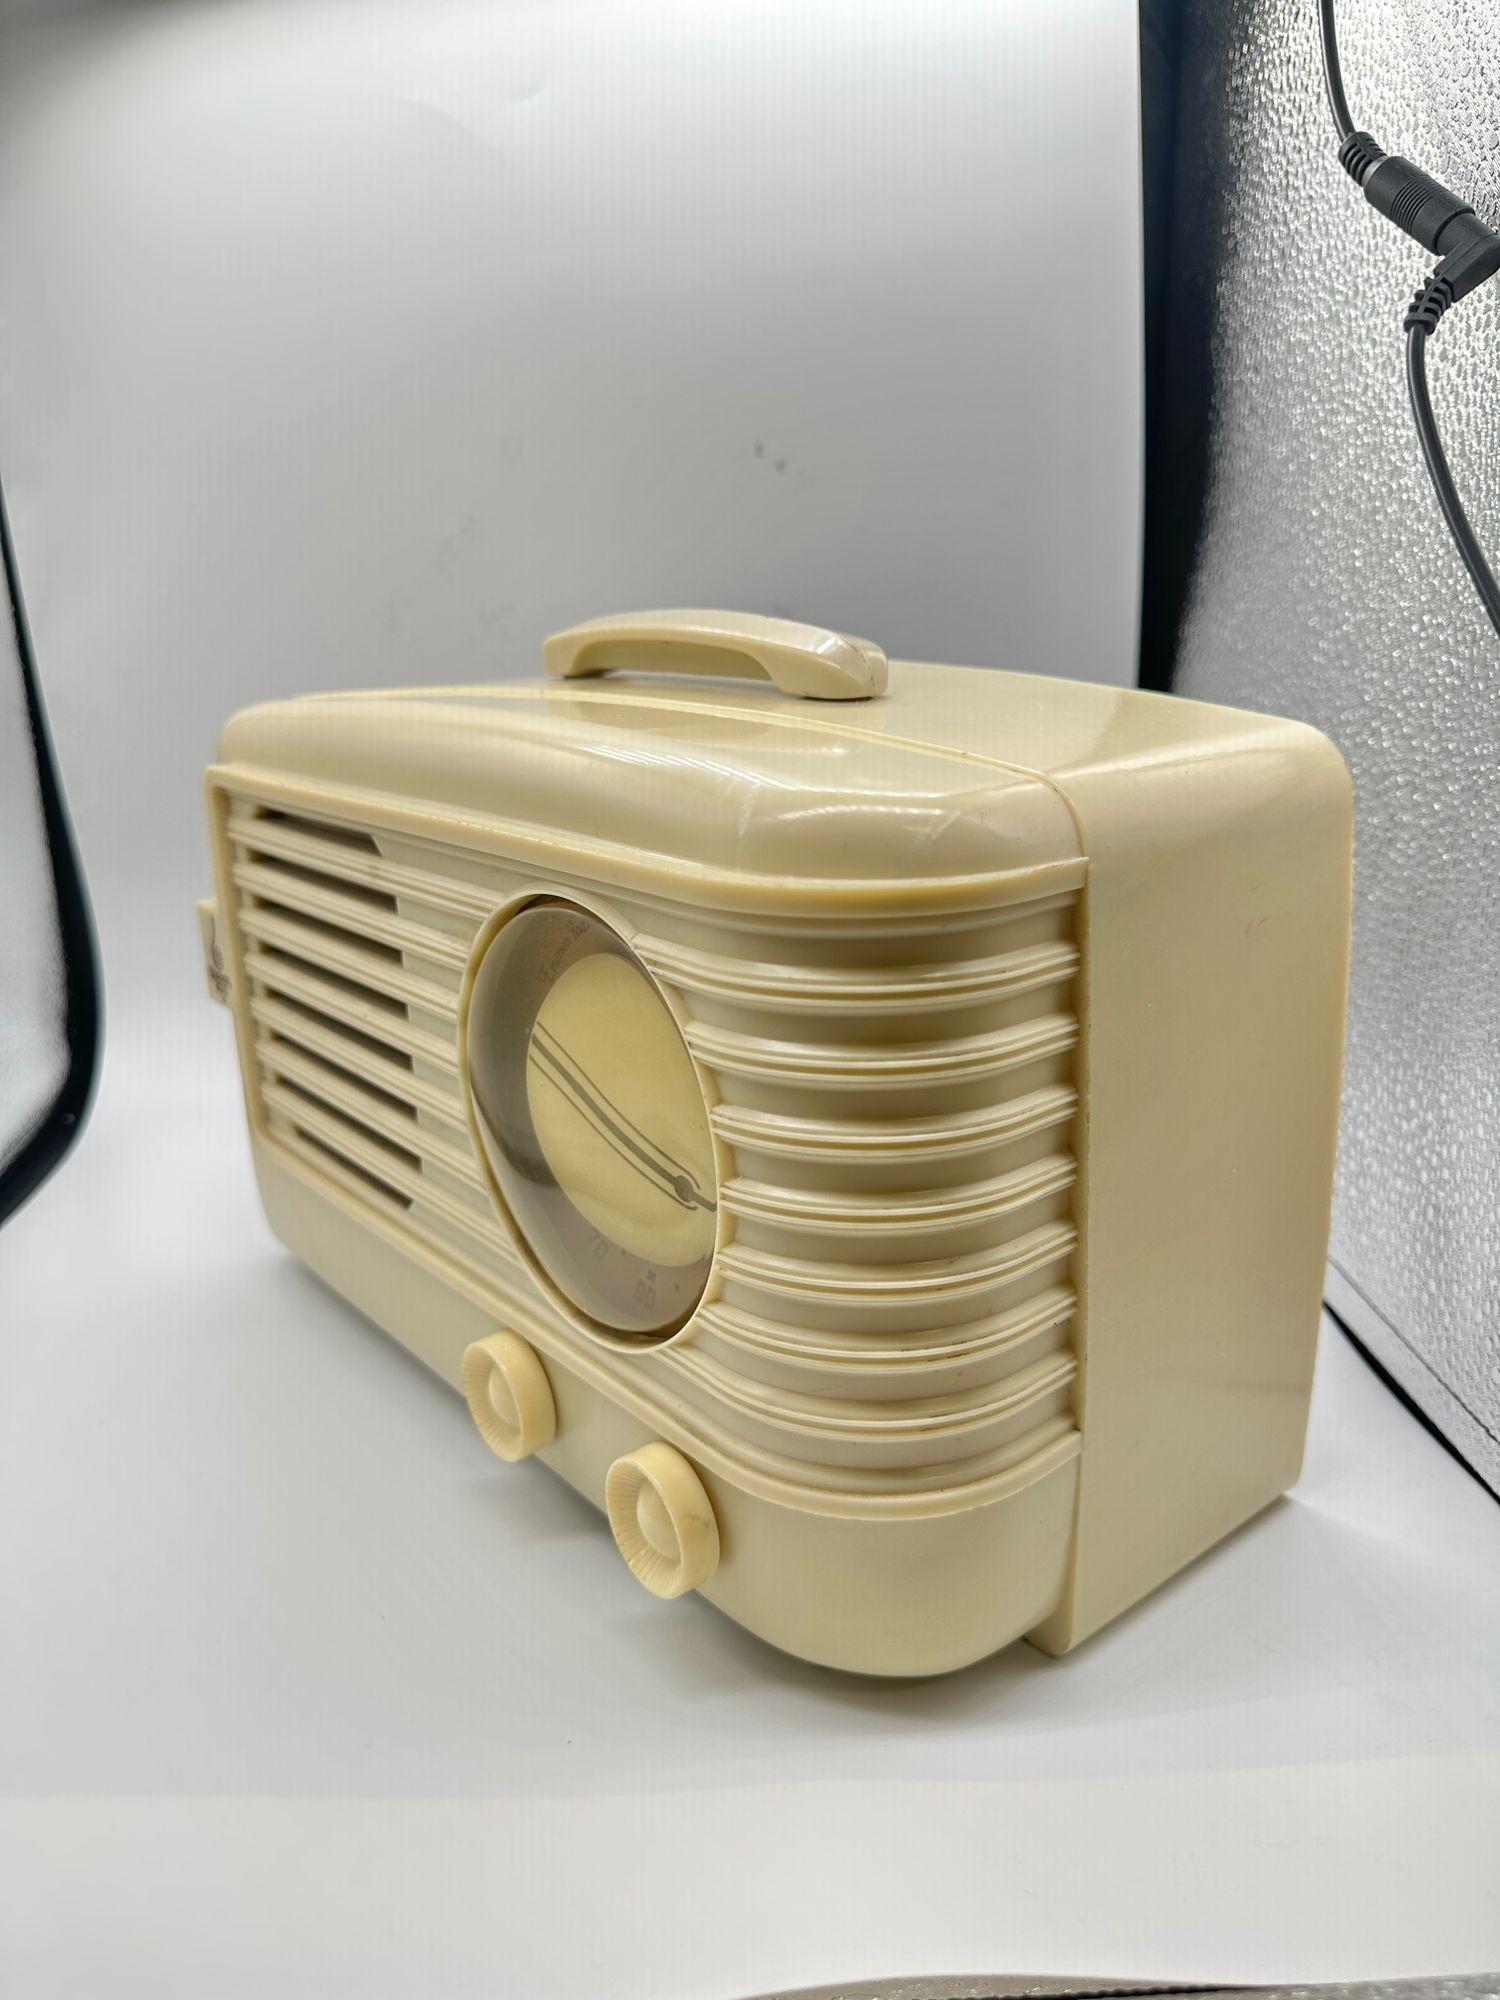 Bakelite Carrara Ivory 1949 Emerson Model 581 Plaskon AM Vacuum Tube Radio Golden Age For Sale